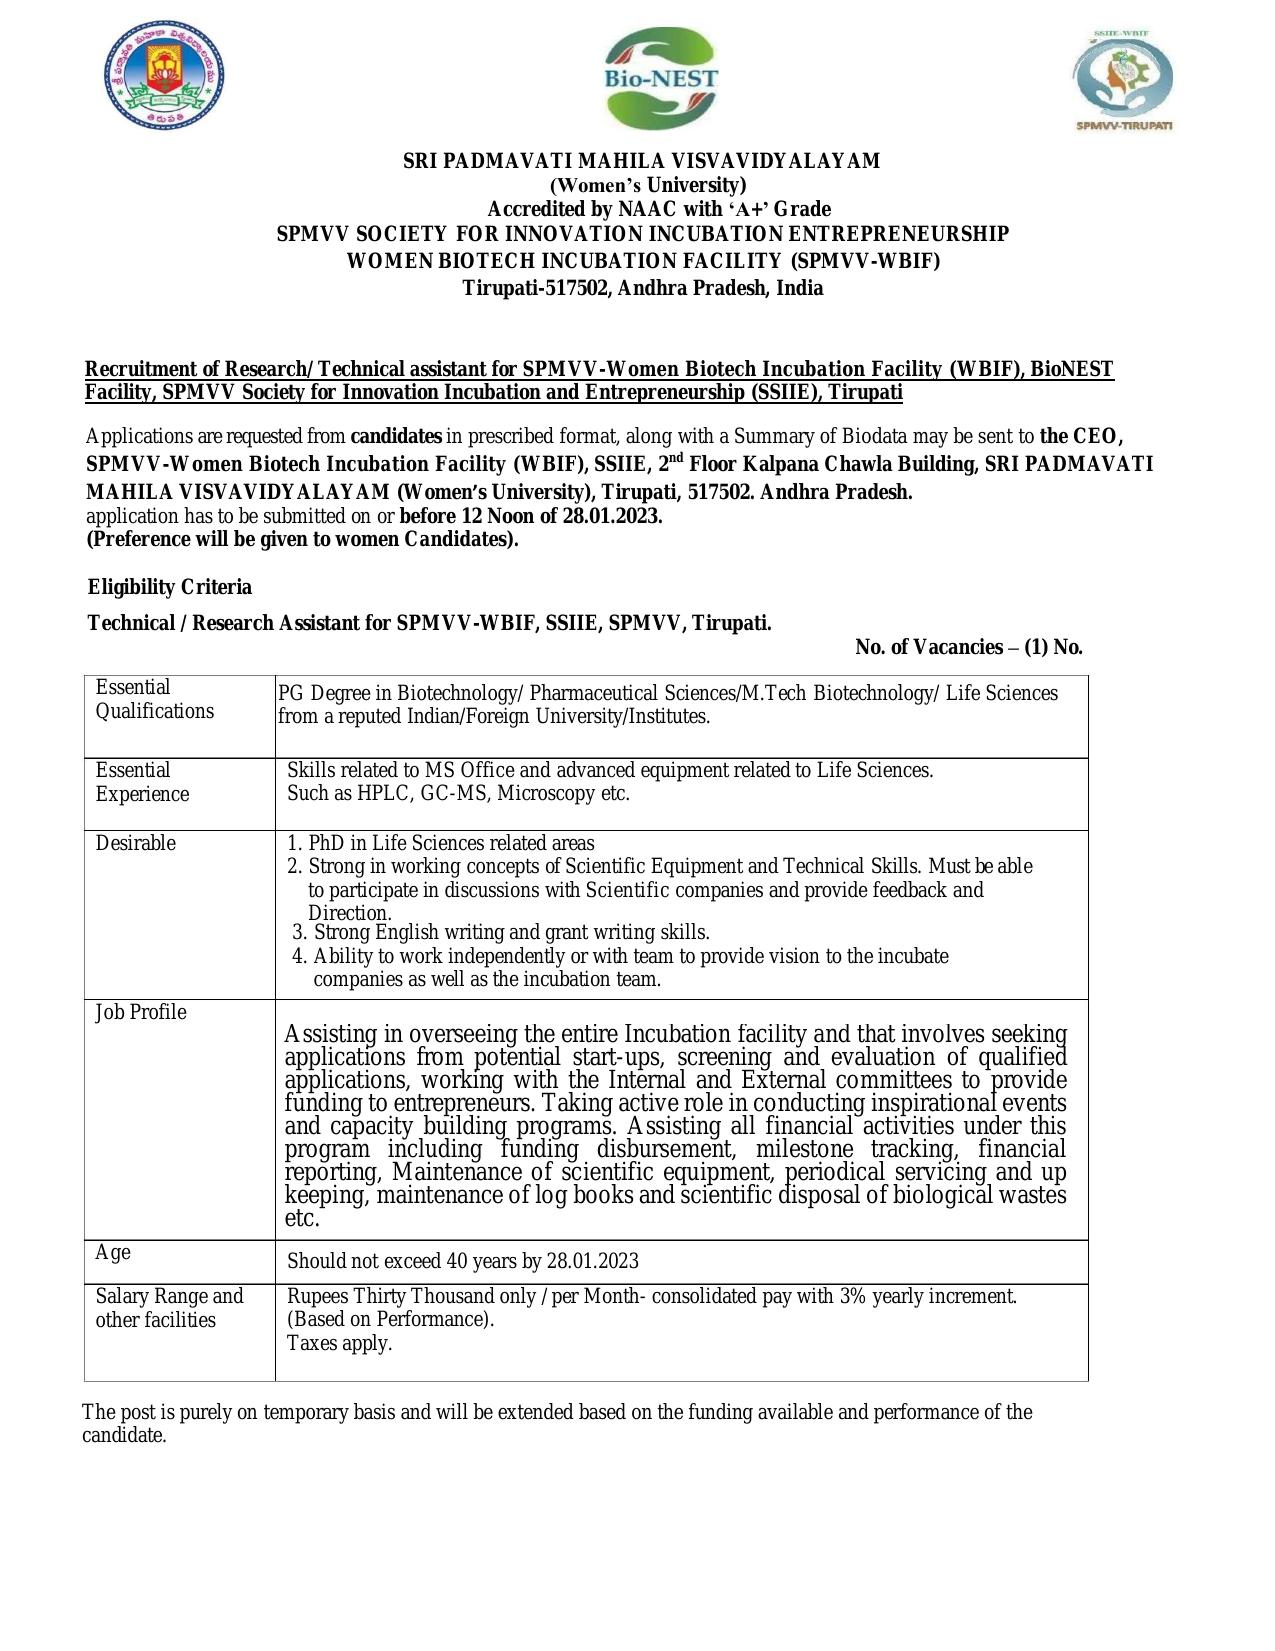 Sri Padmavati Mahila Visvavidyalayam (SPMVV) Invites Application for Technical or Research Assistant Recruitment 2023 - Page 3